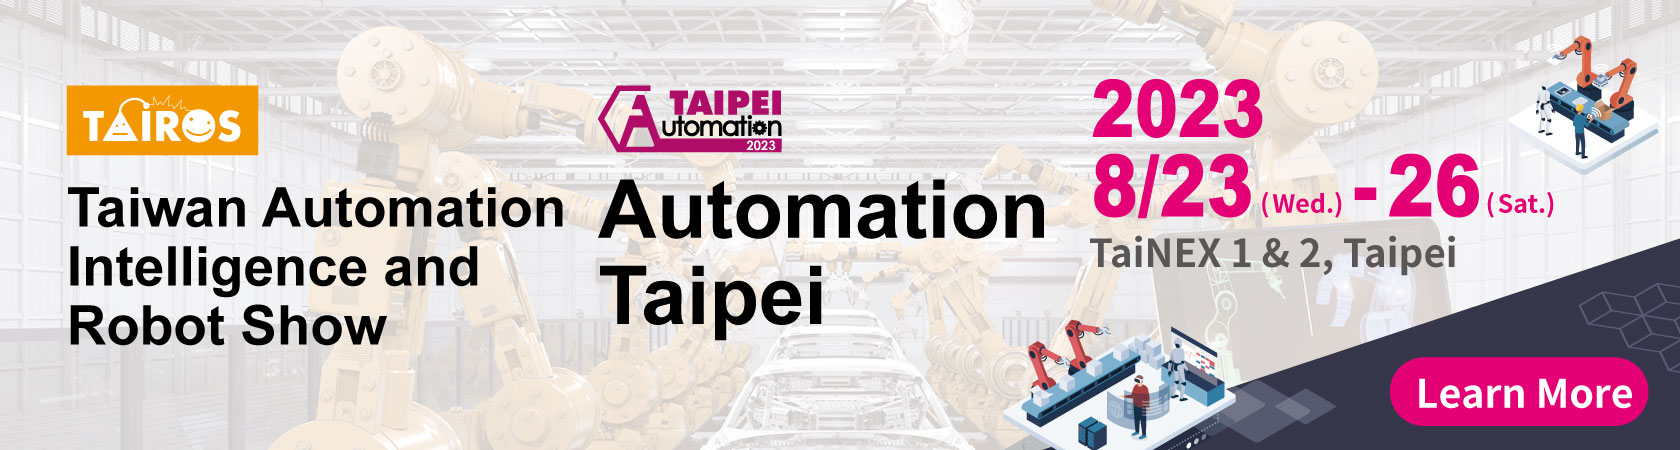 Taipei International Industrial Automation Exhibition 2023